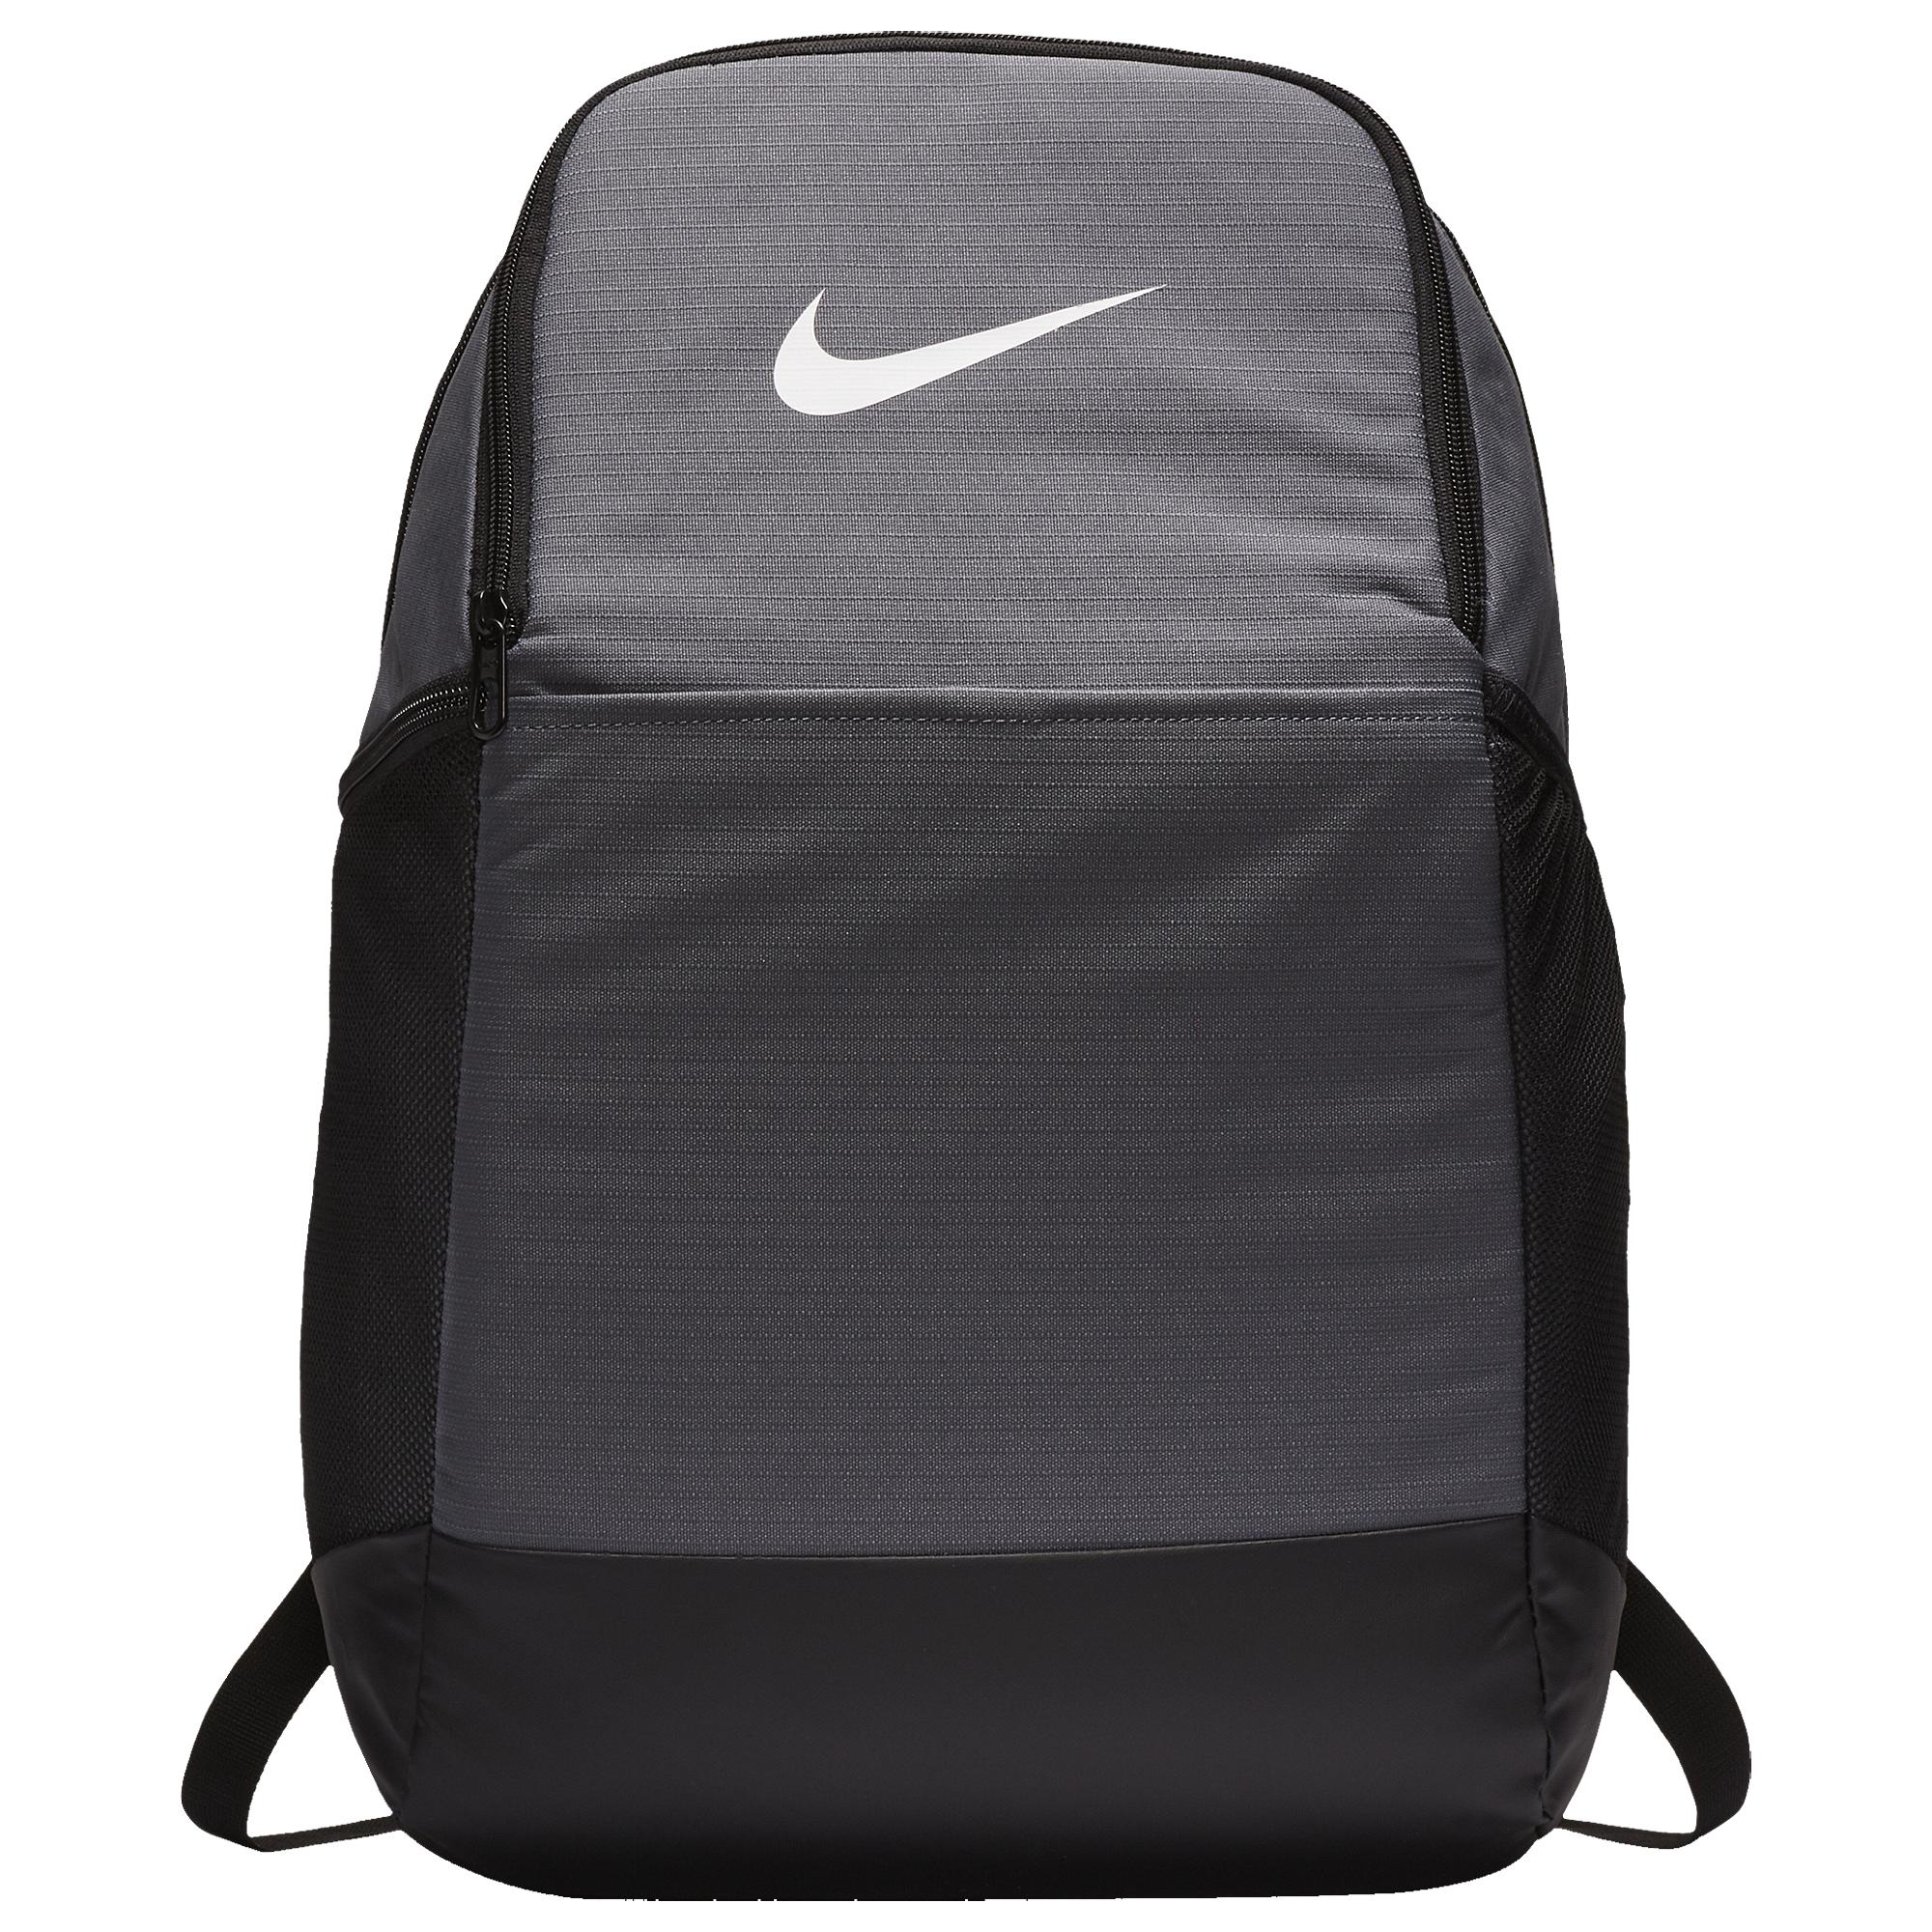 Nike Synthetic Brasilia Medium Backpack in Flint Gray (Gray) - Lyst